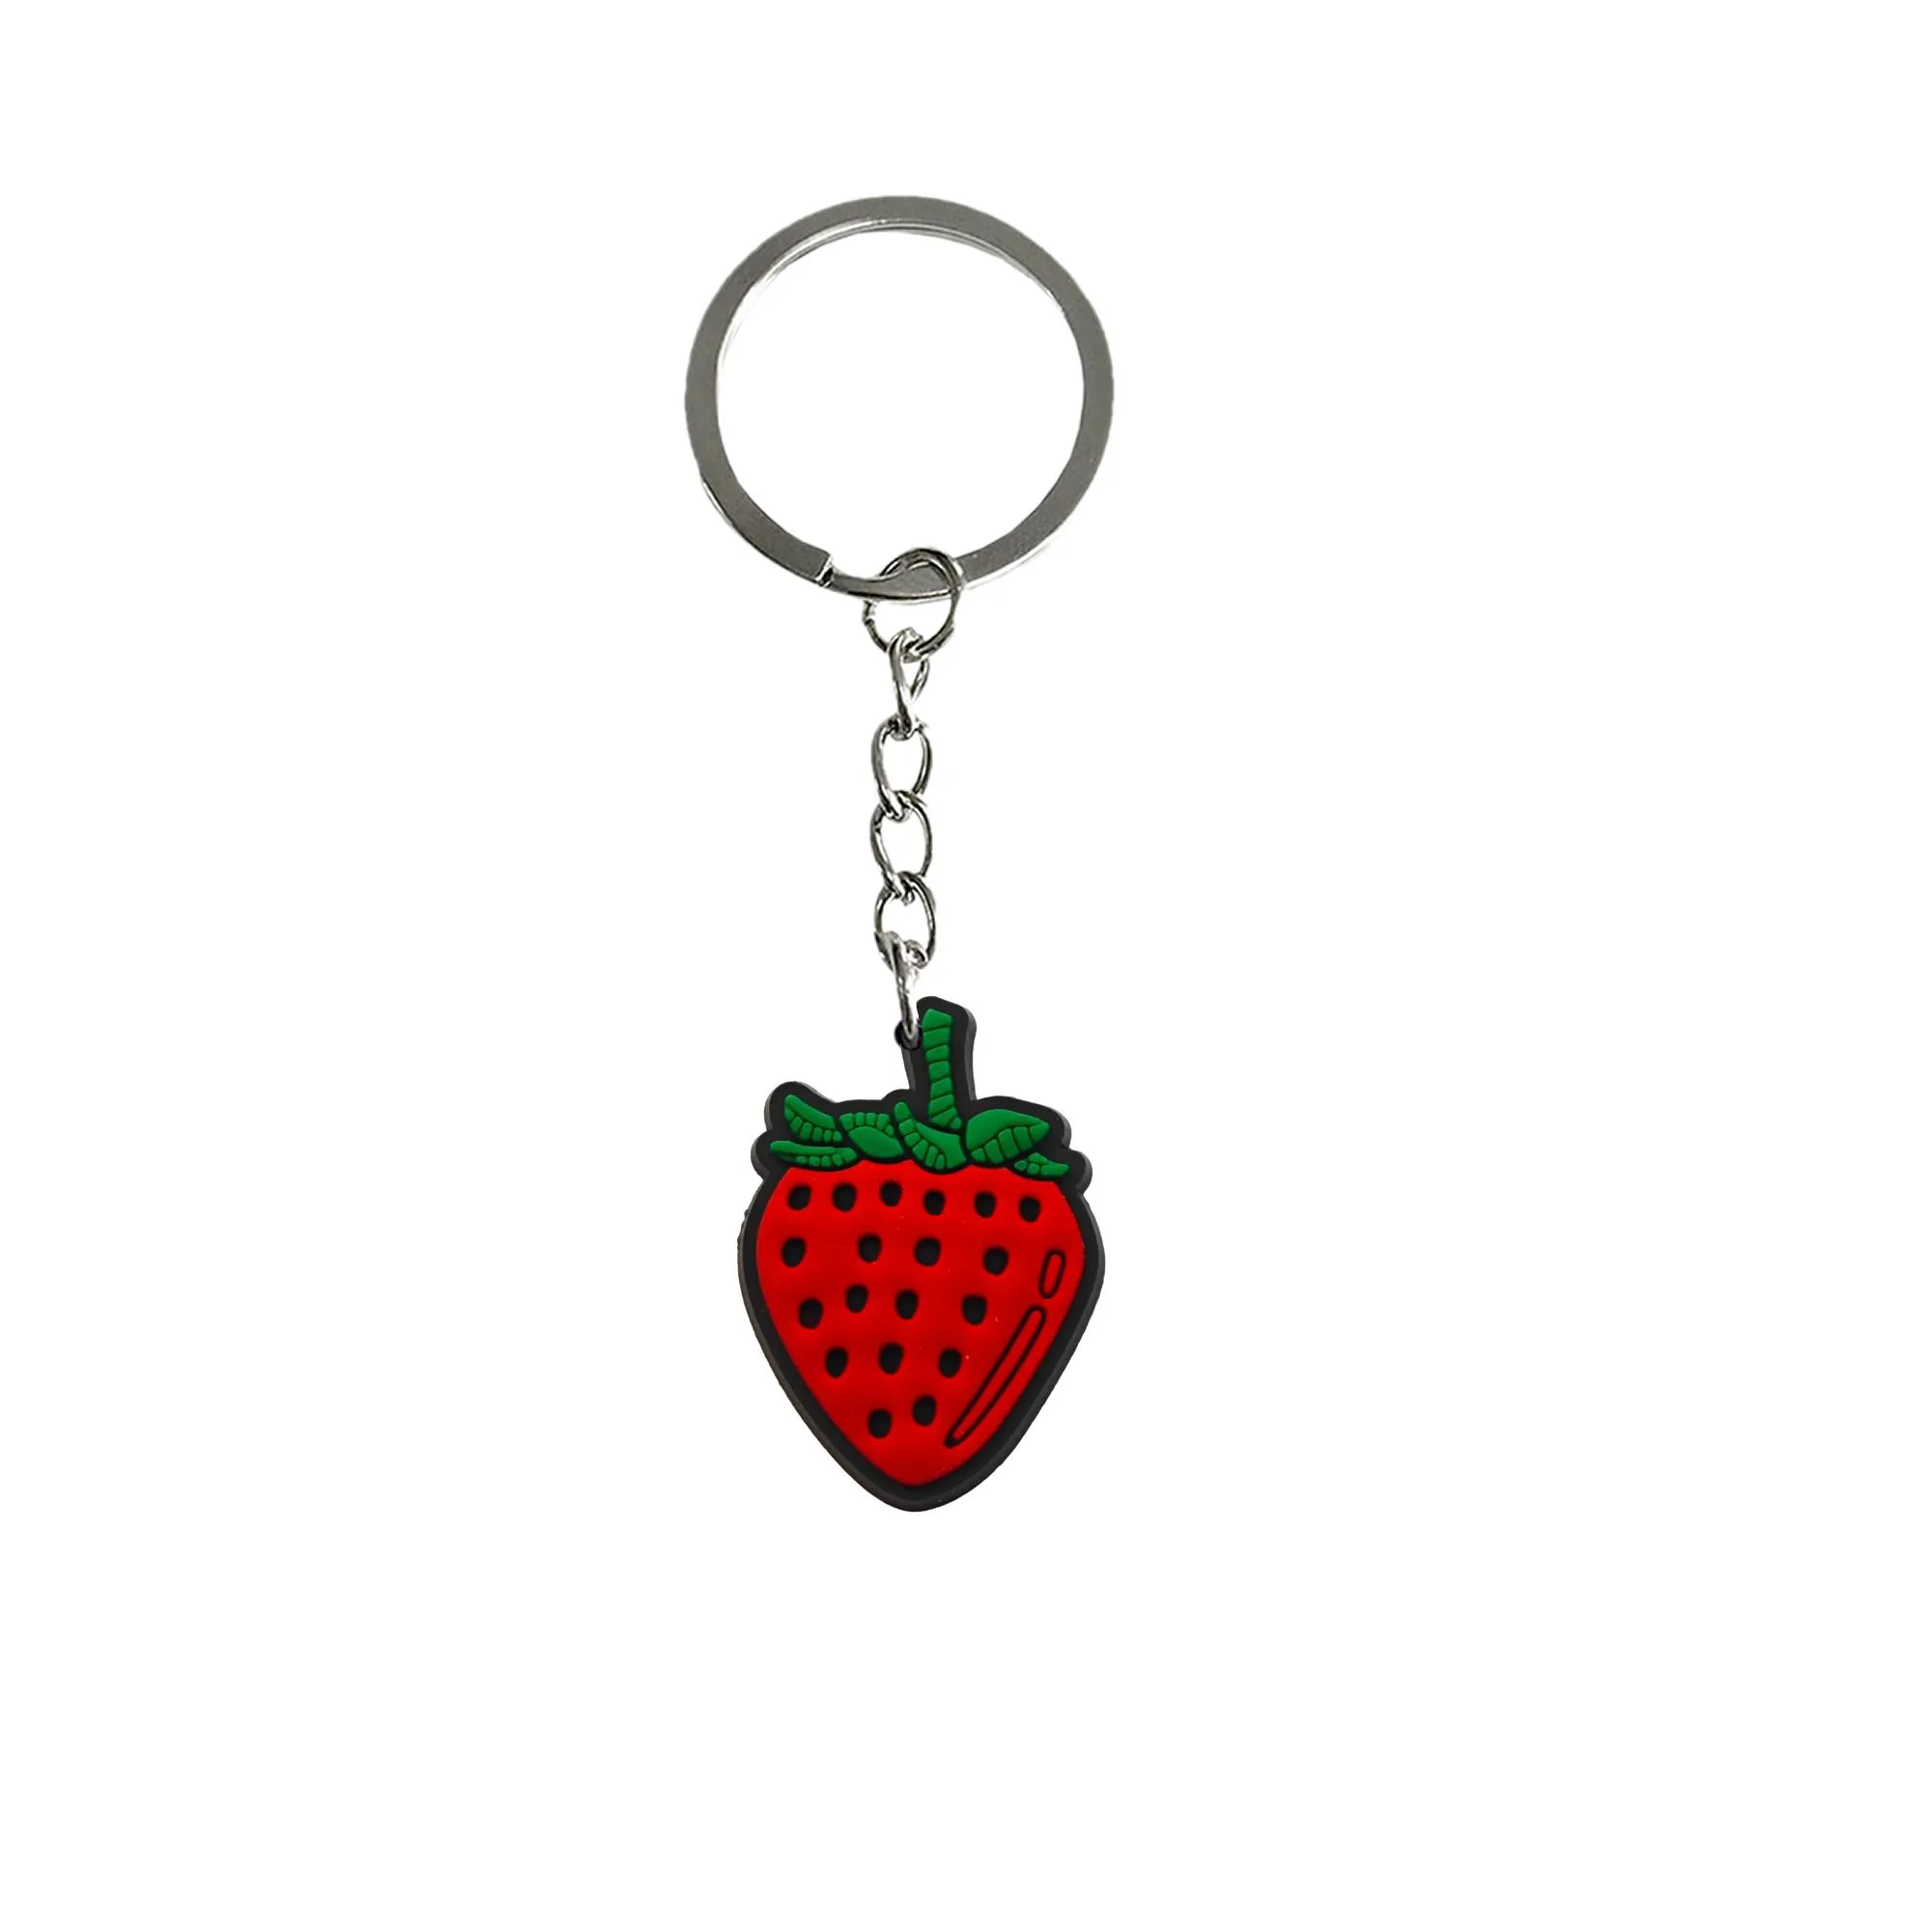 red keychain key ring for women goodie bag stuffers supplies pendant accessories bags keyring suitable schoolbag school backpack shoulder charm keyrings